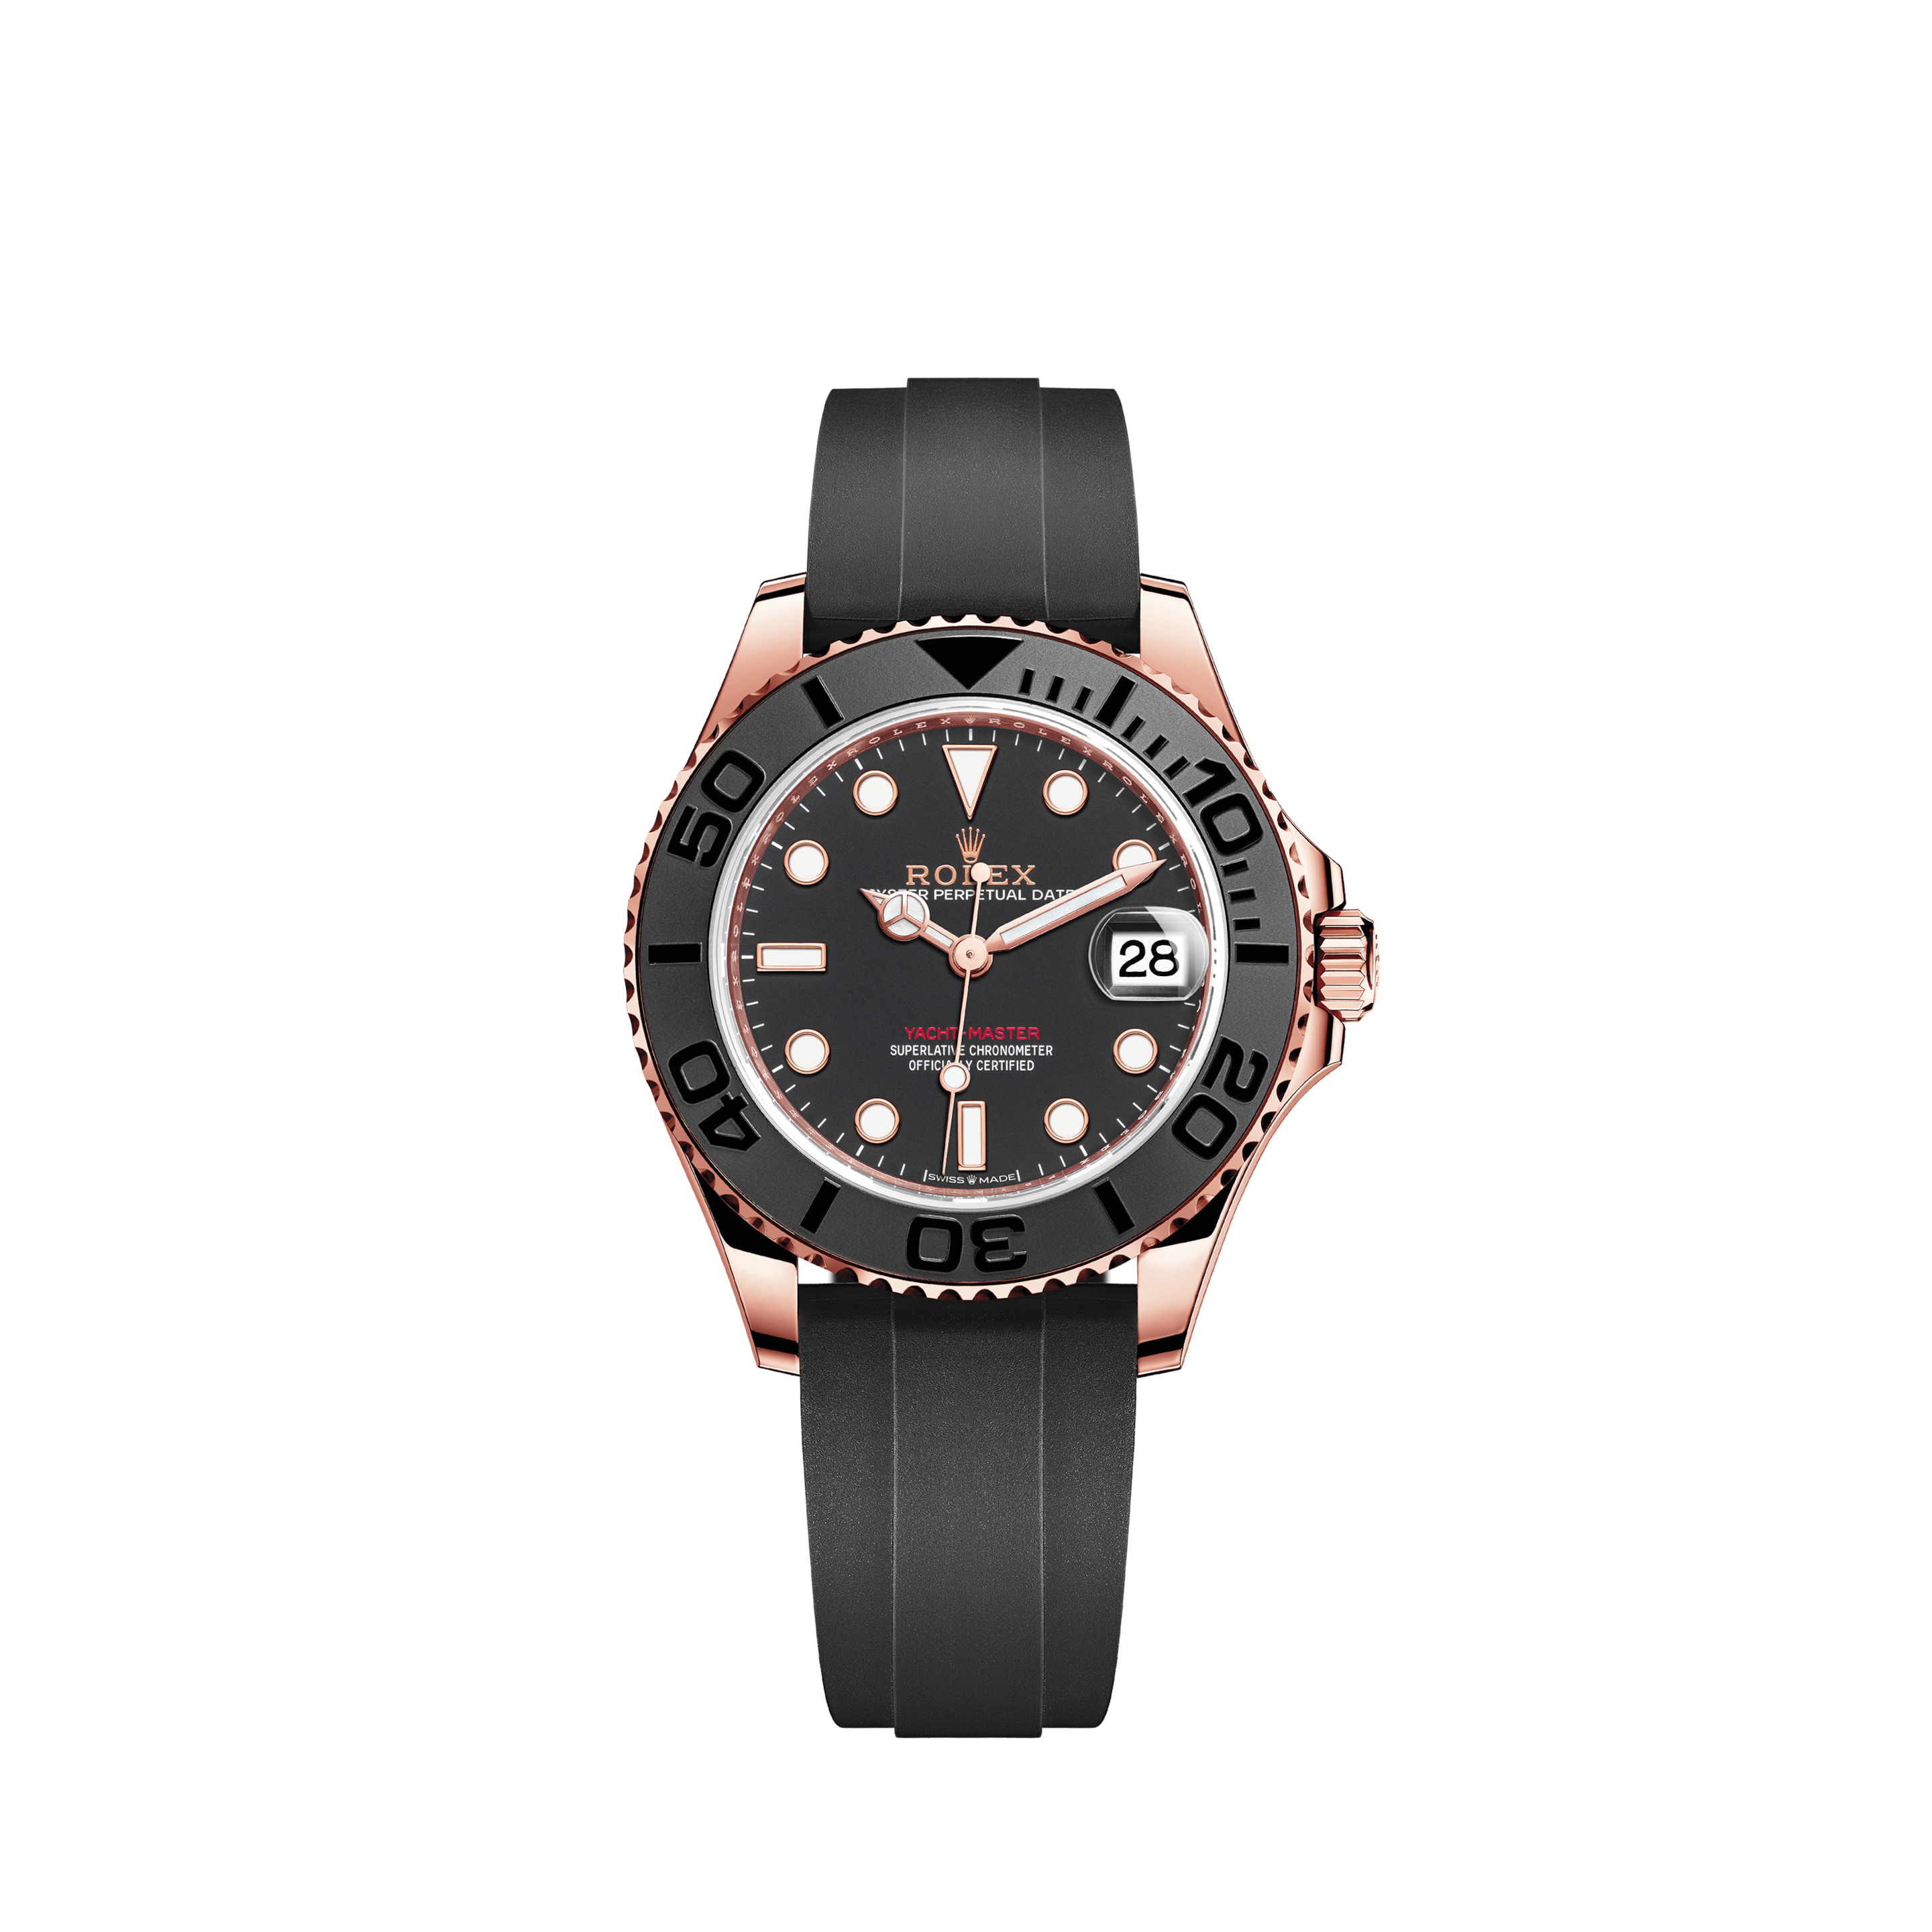 Rolex Explorer II Black Dial - 226570 - Full Set - 2021Rolex Explorer II Black Dial - Automatic GMT Watch - 216570 (2017)